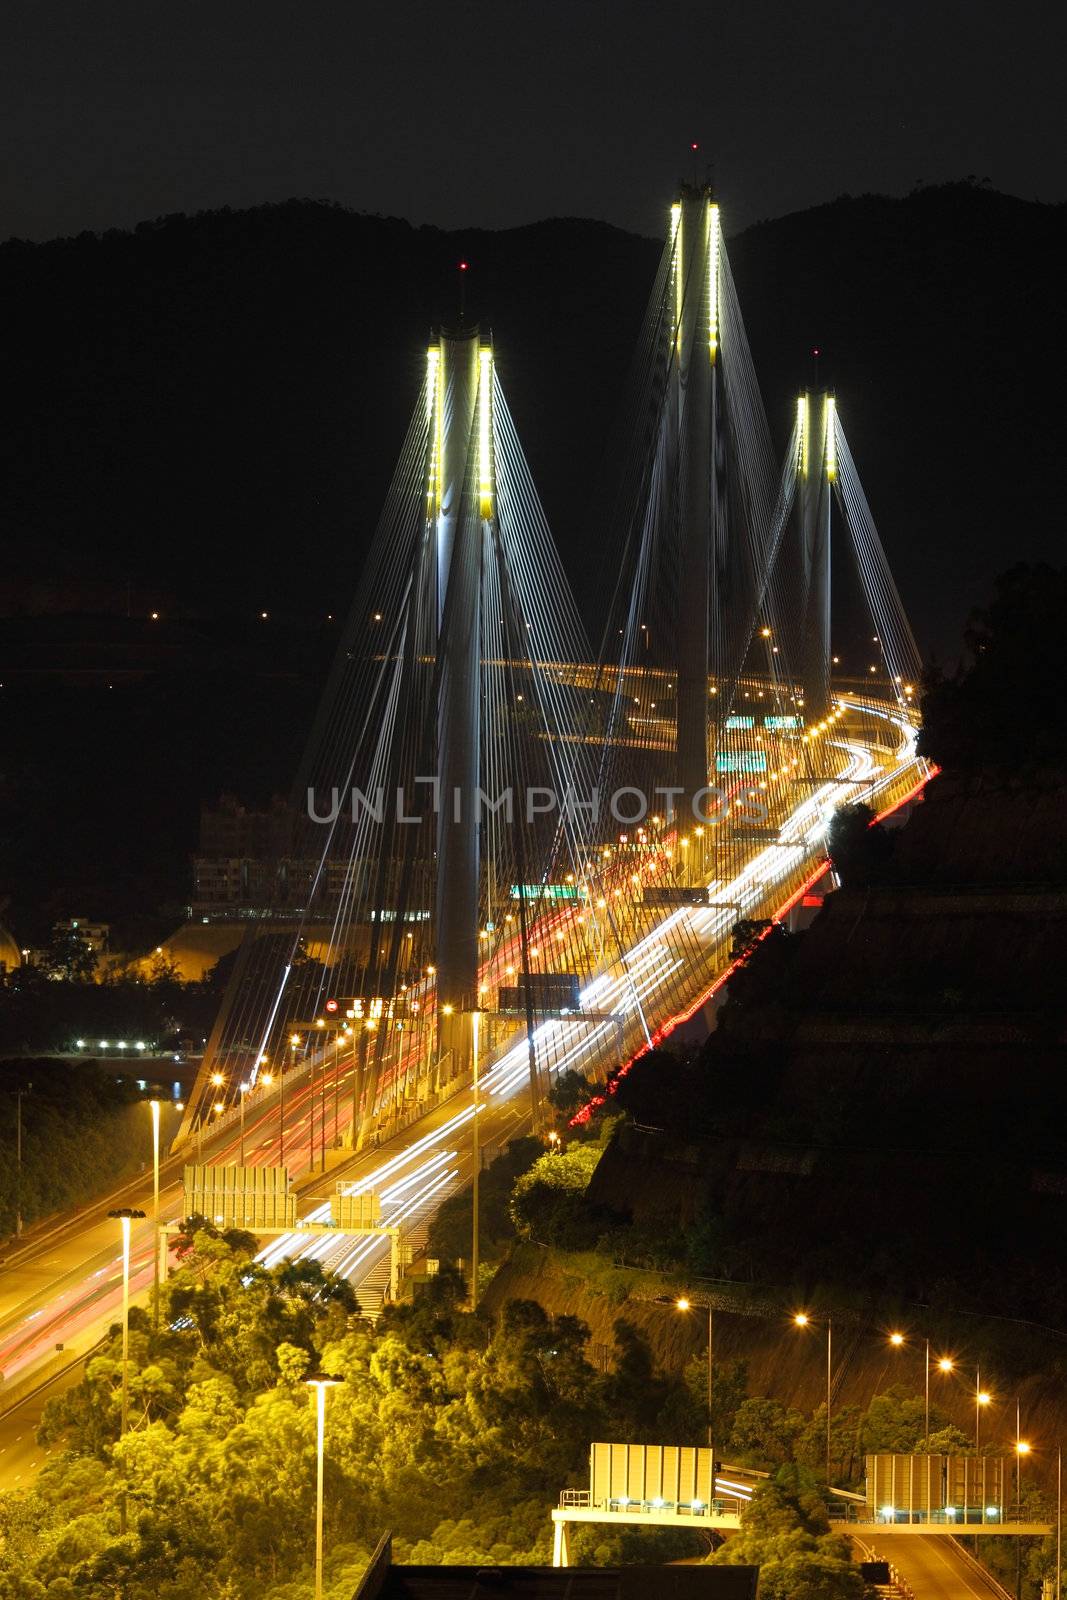 Ting Kau Bridge at night